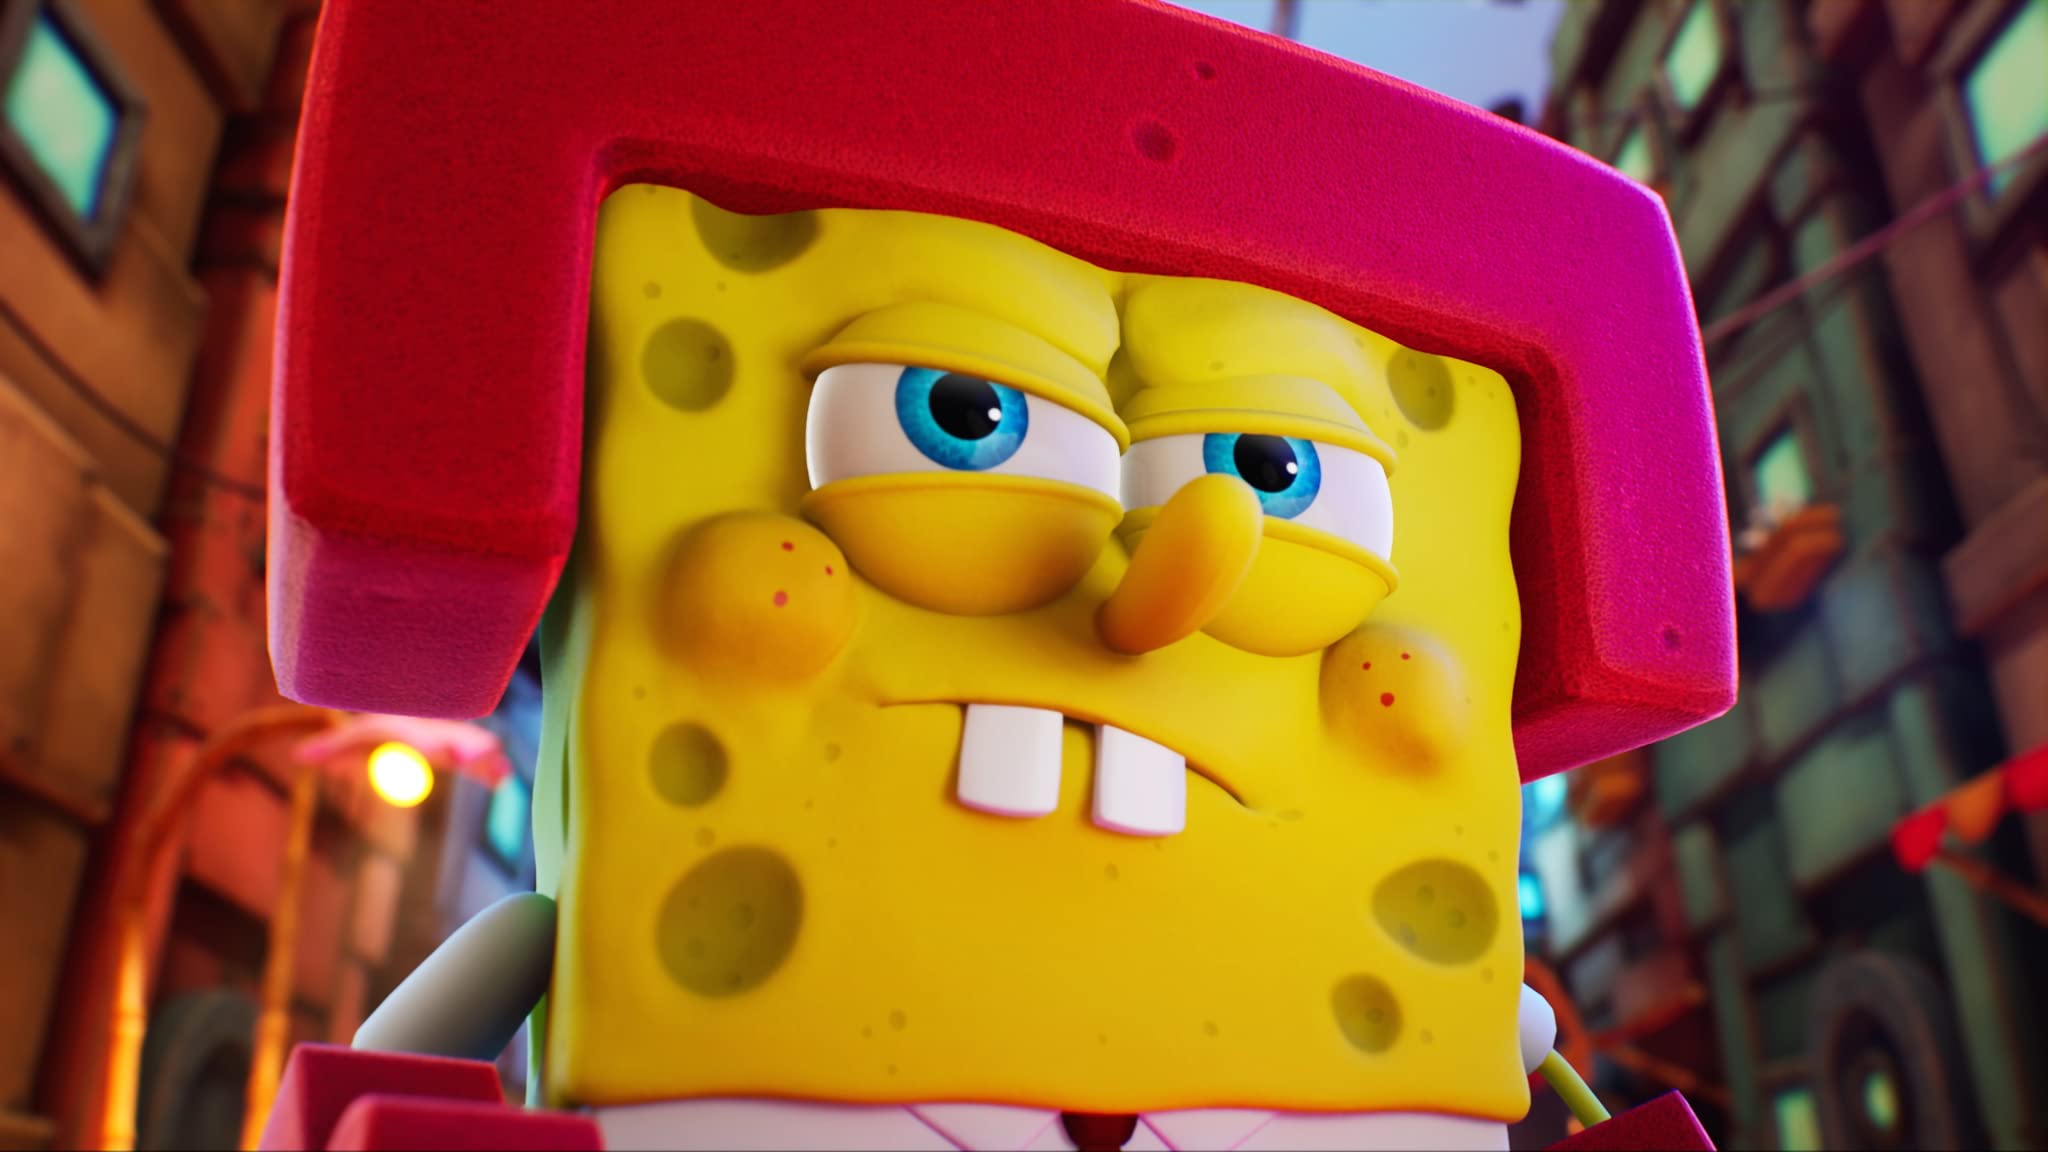 SpongeBob SquarePants Cosmic Shake - PlayStation 4 (EU Version)